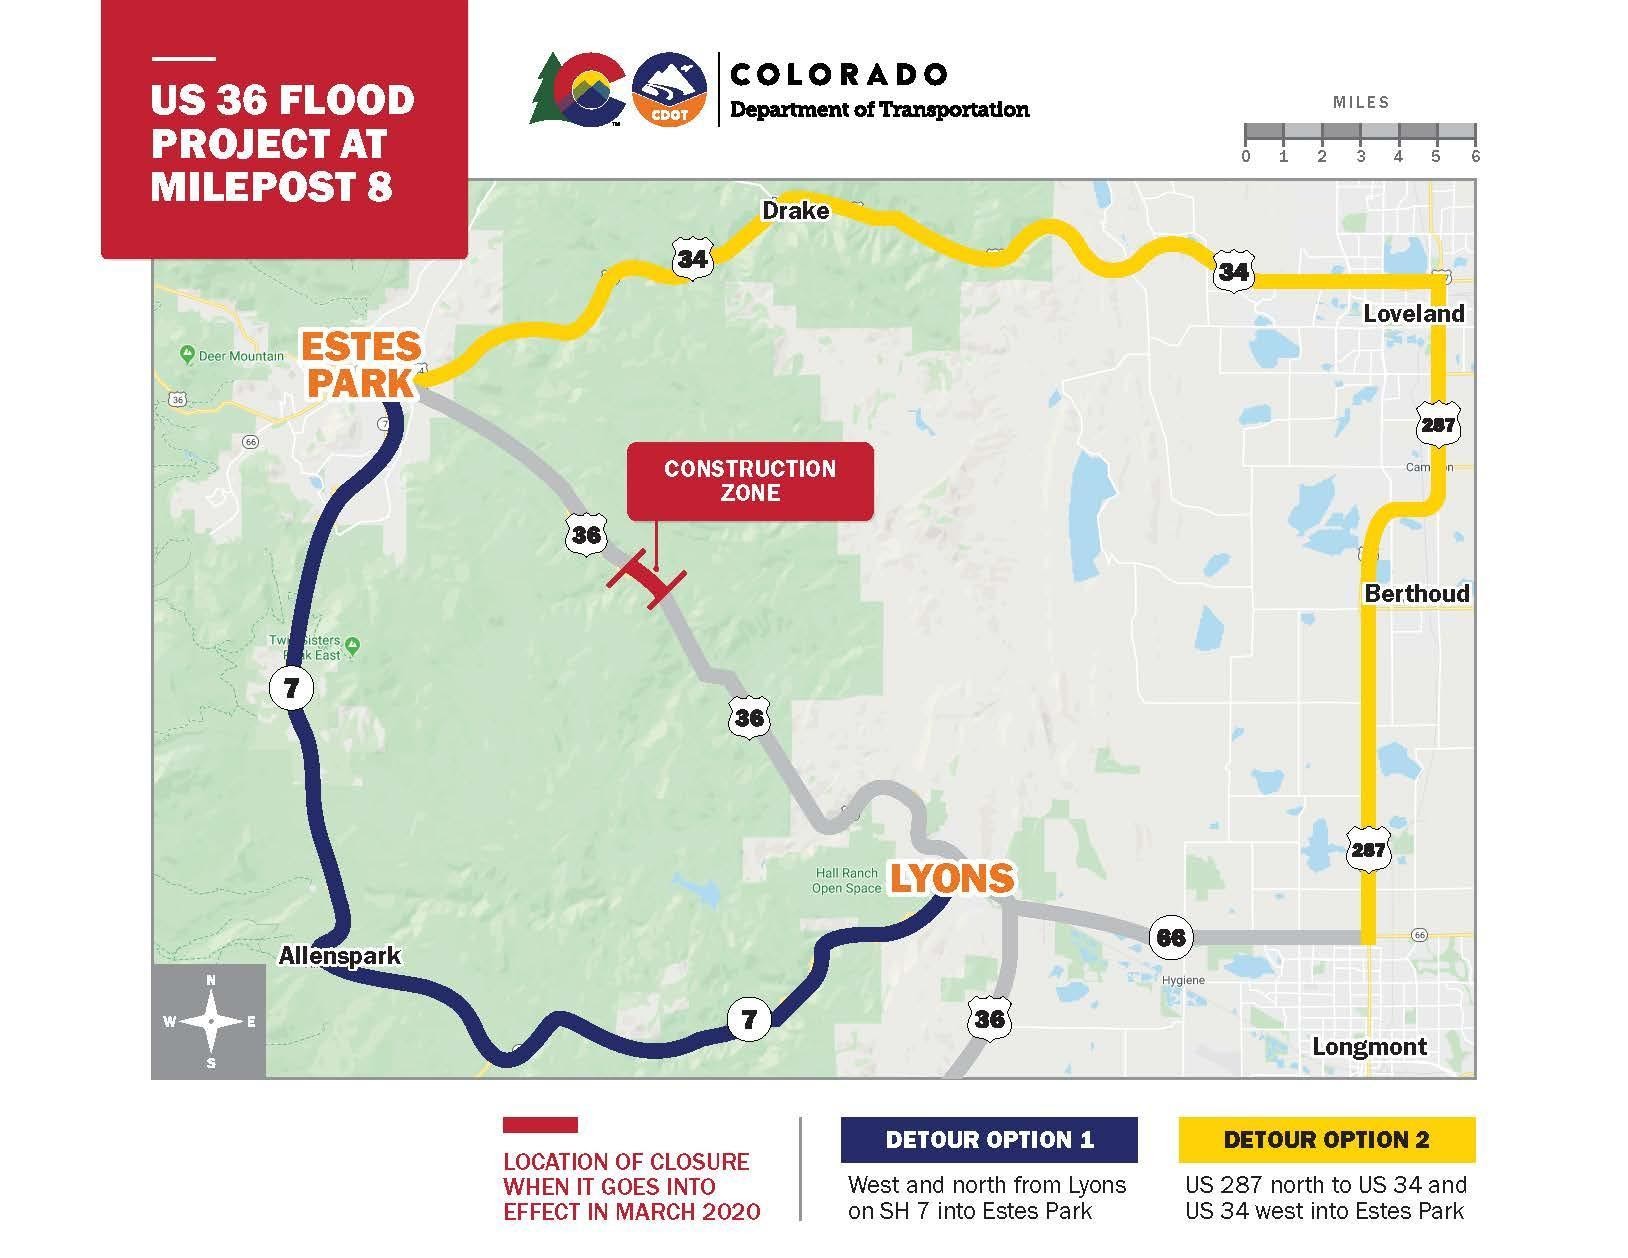 US 36 Flood Project construction area detour map on CO 7 to Allenspark between Estes Park and Lyons detail image